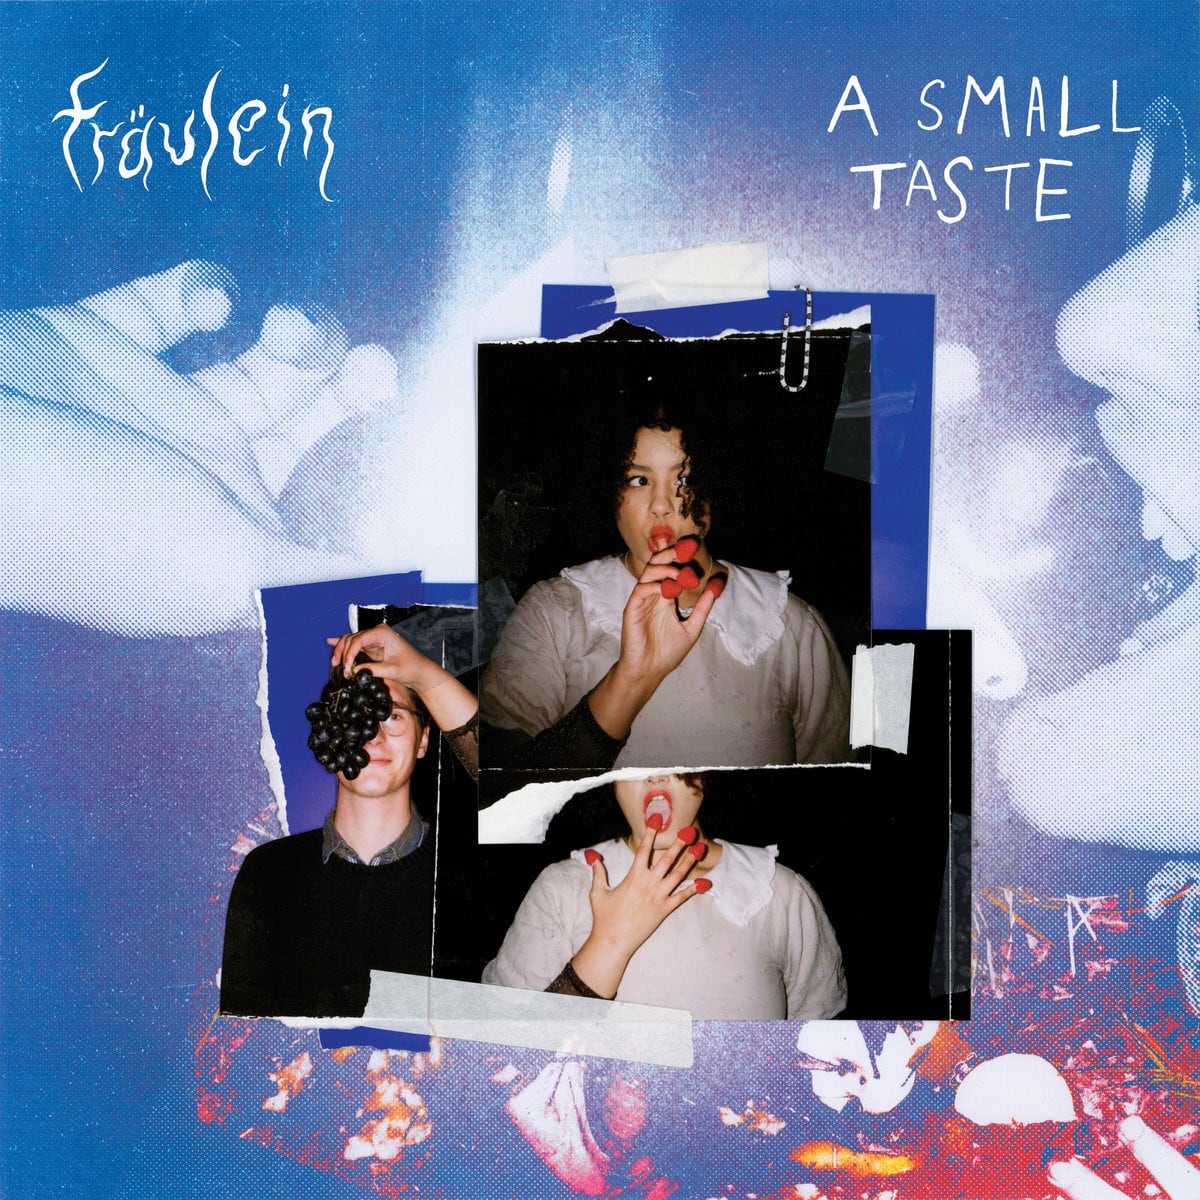 Fräulein / A Small Taste（200 Ltd 12inch EP）